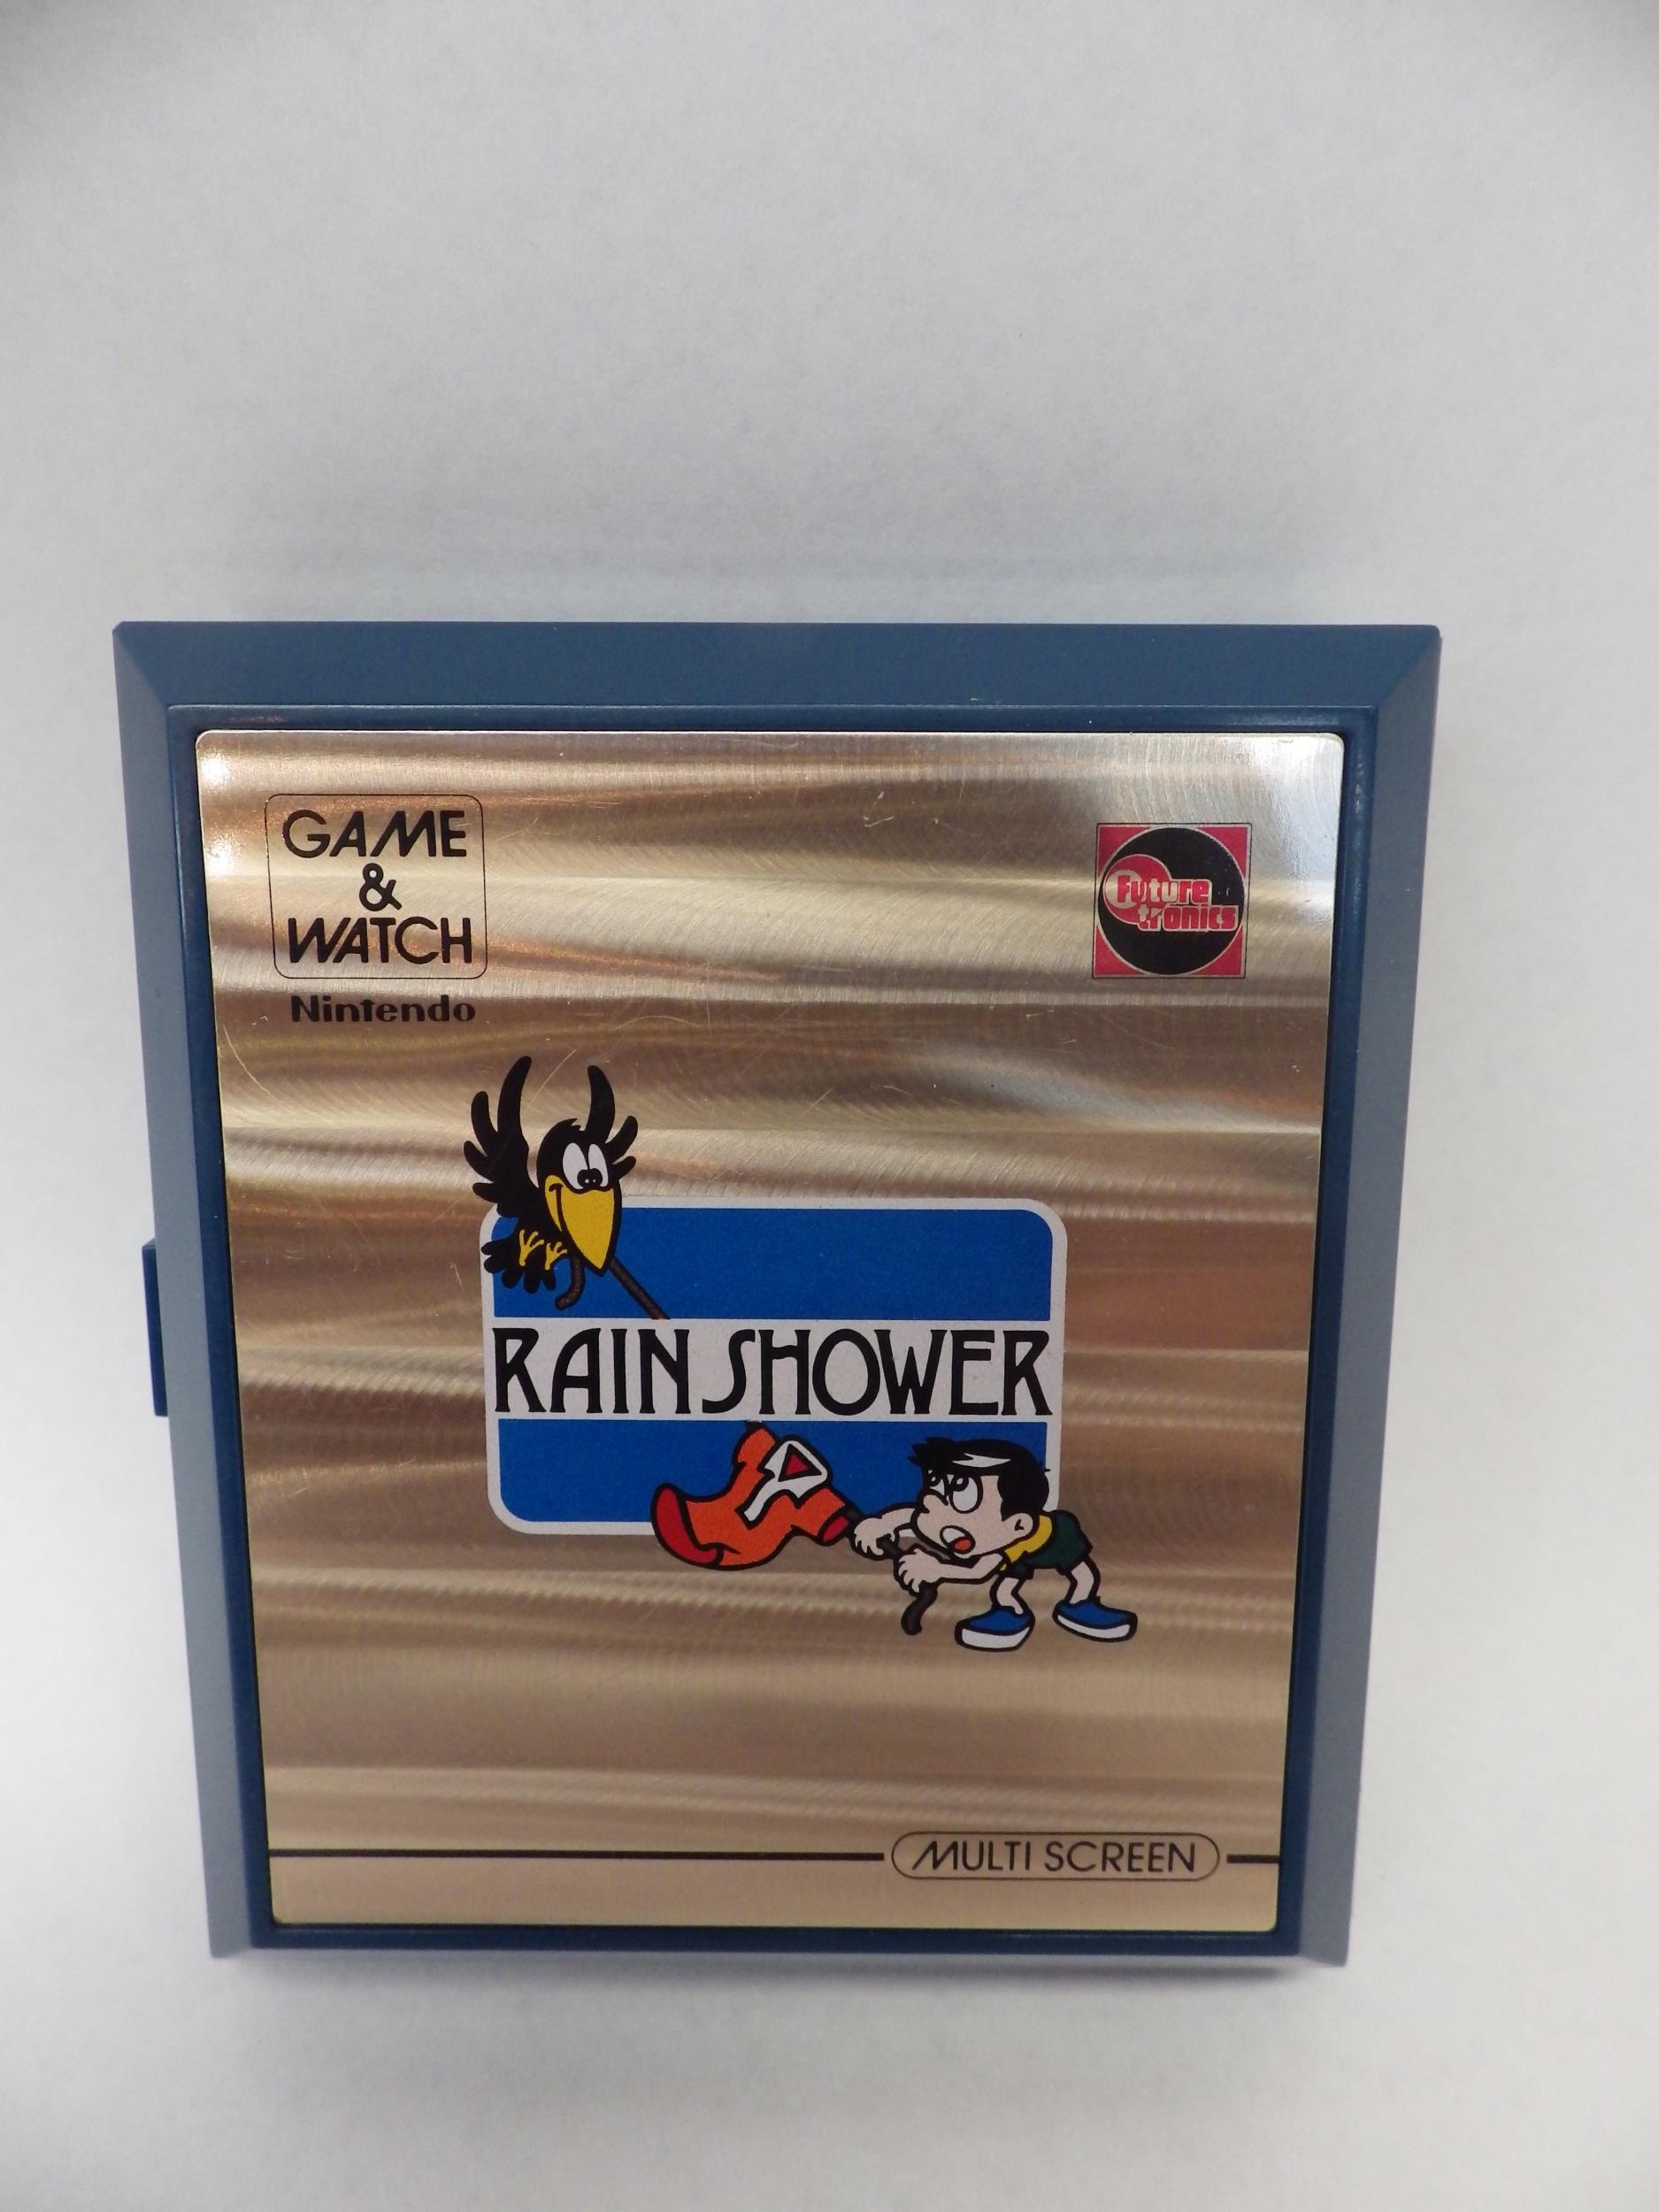 Nintendo Game & Watch Multi Screen Rain Shower handheld electronic game (LP-57) in original box - Image 3 of 5